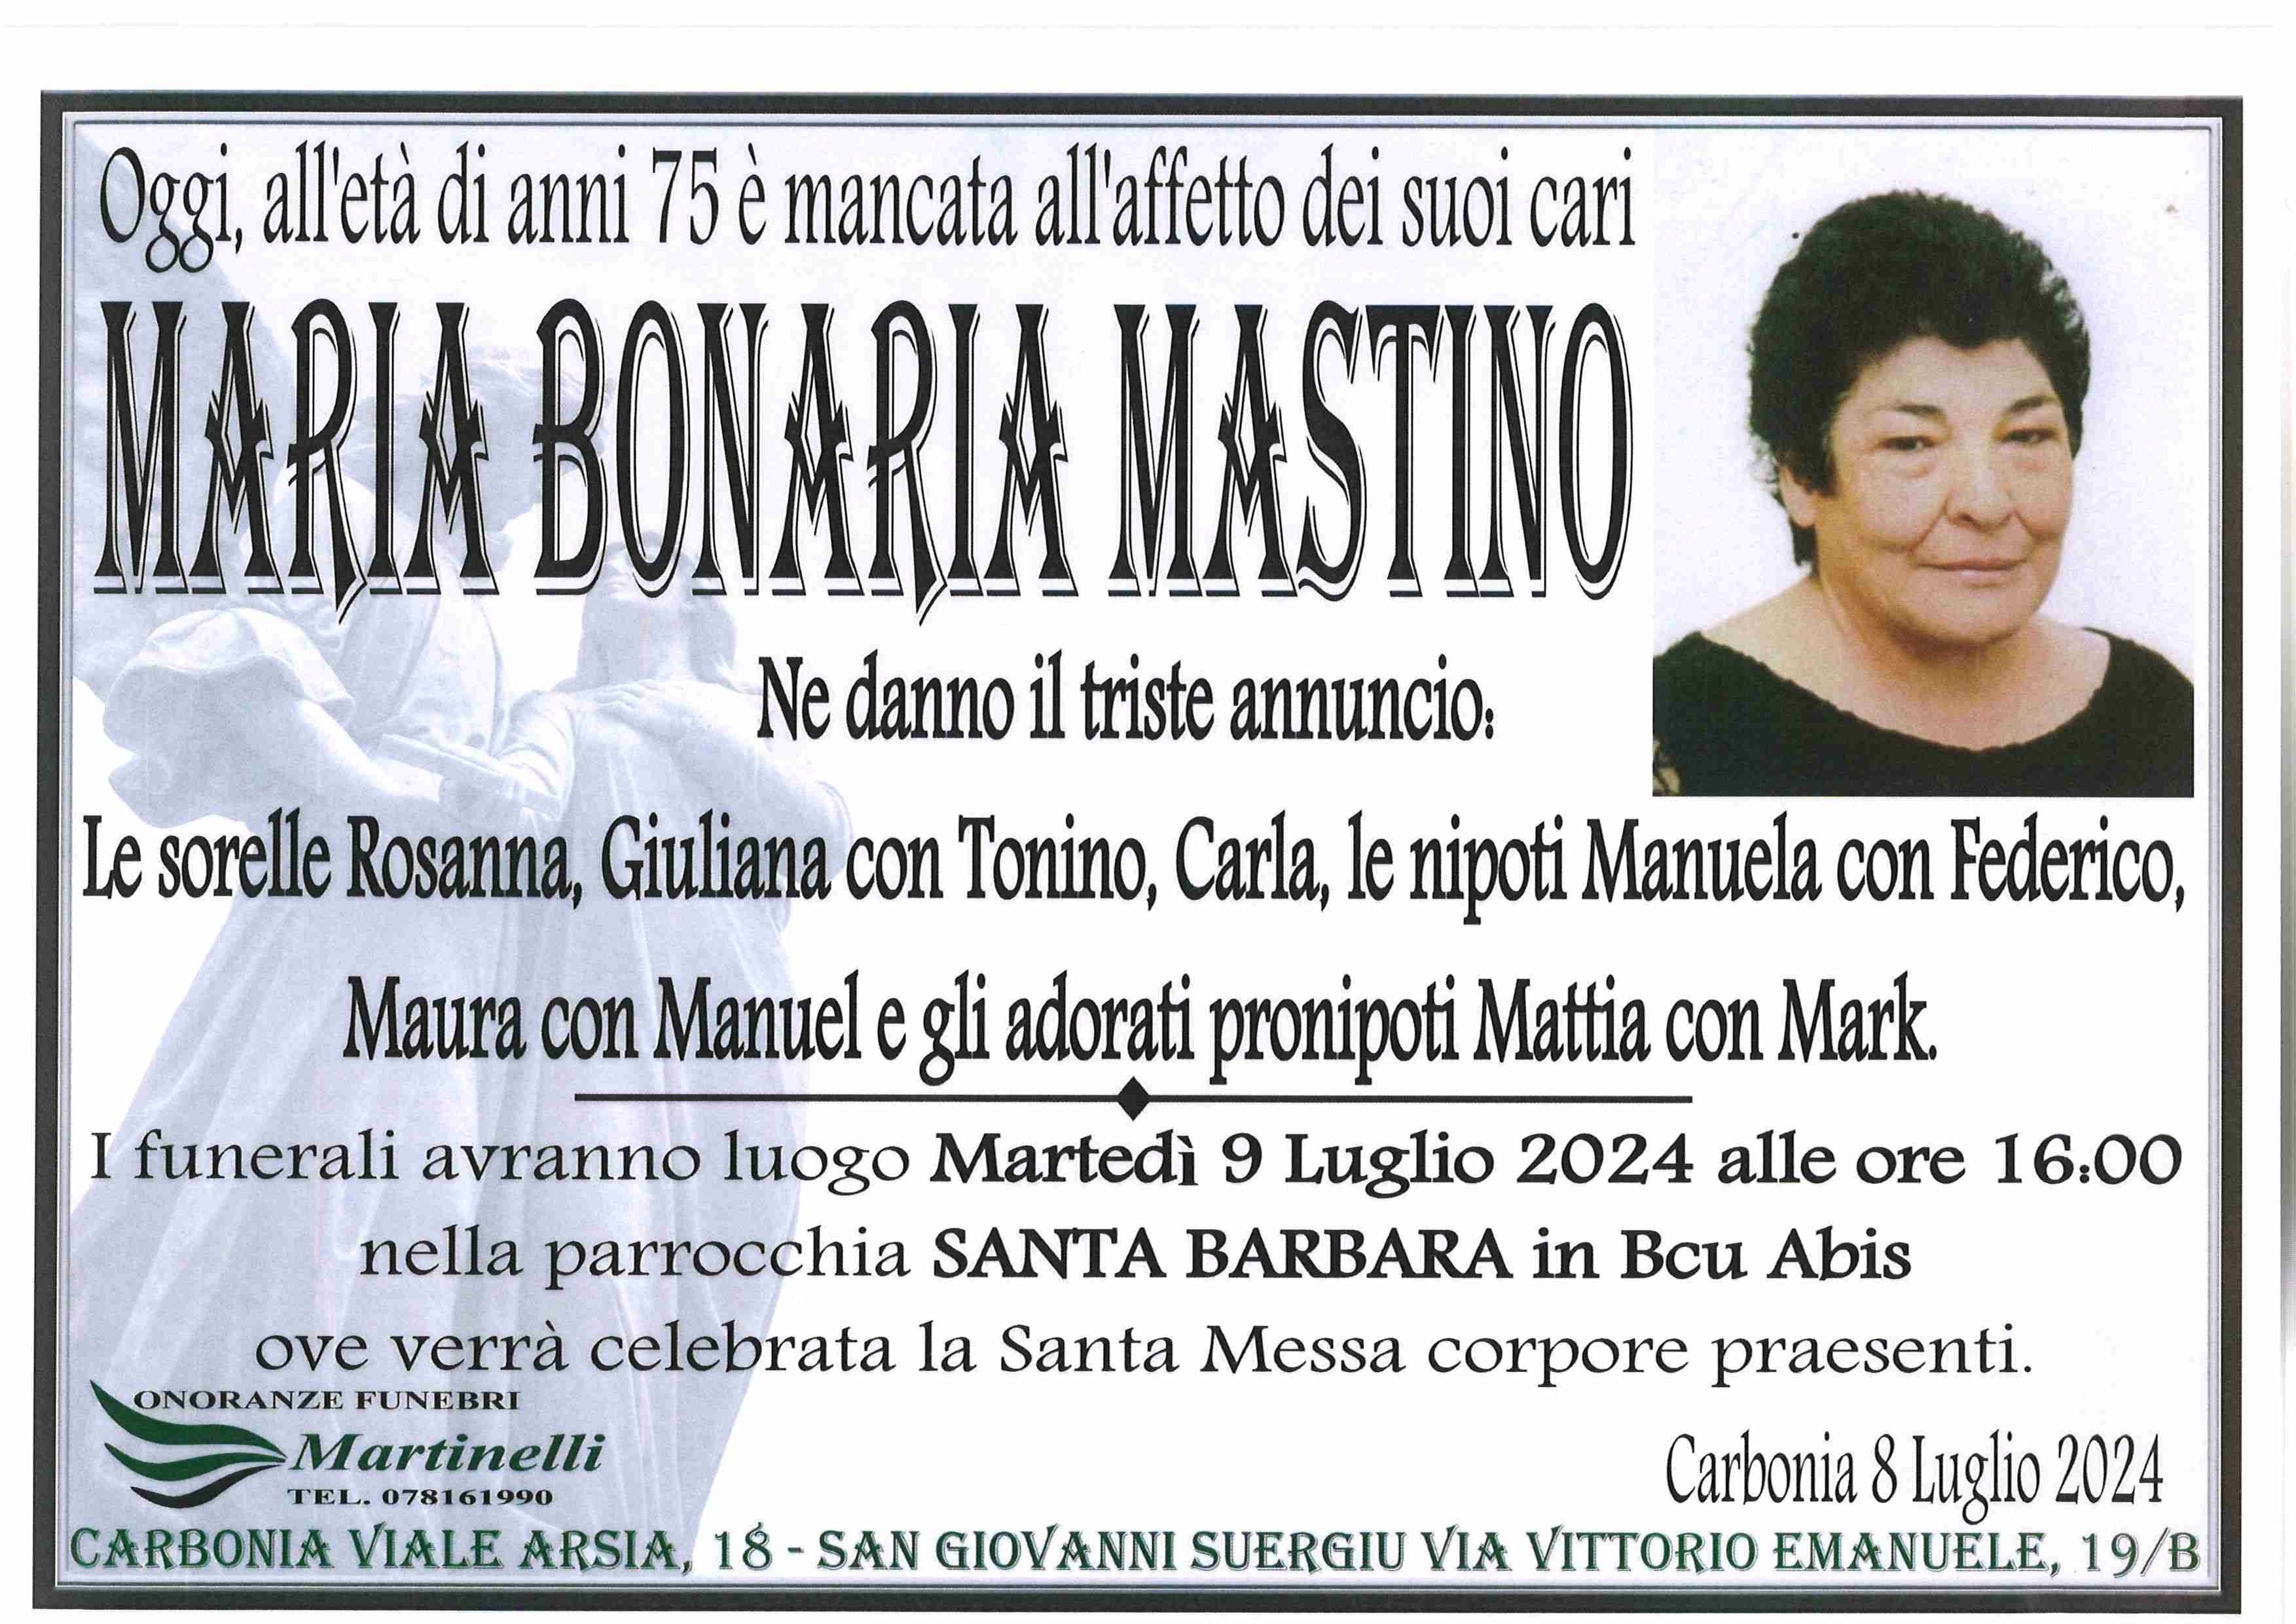 Maria Bonaria  Mastino